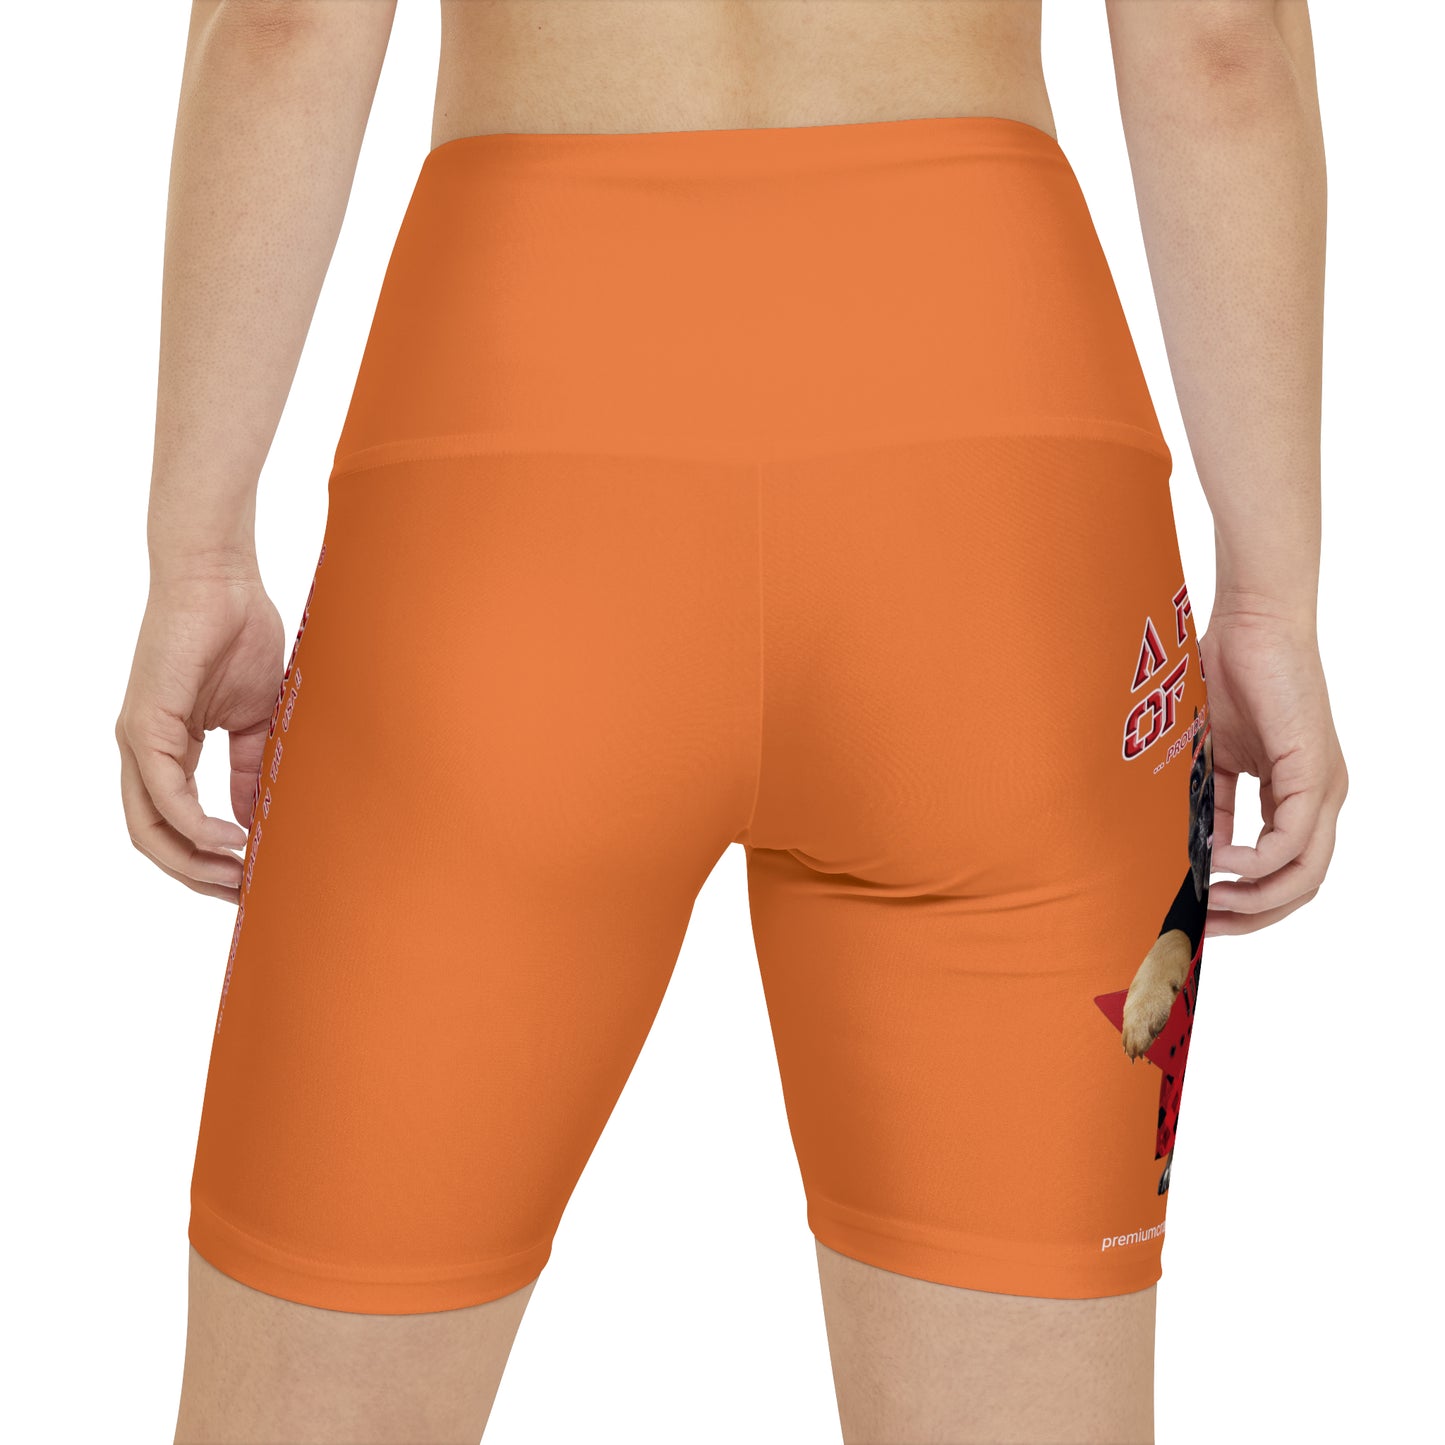 A Piece Of Crap II Women's Workout Shorts - Crusta